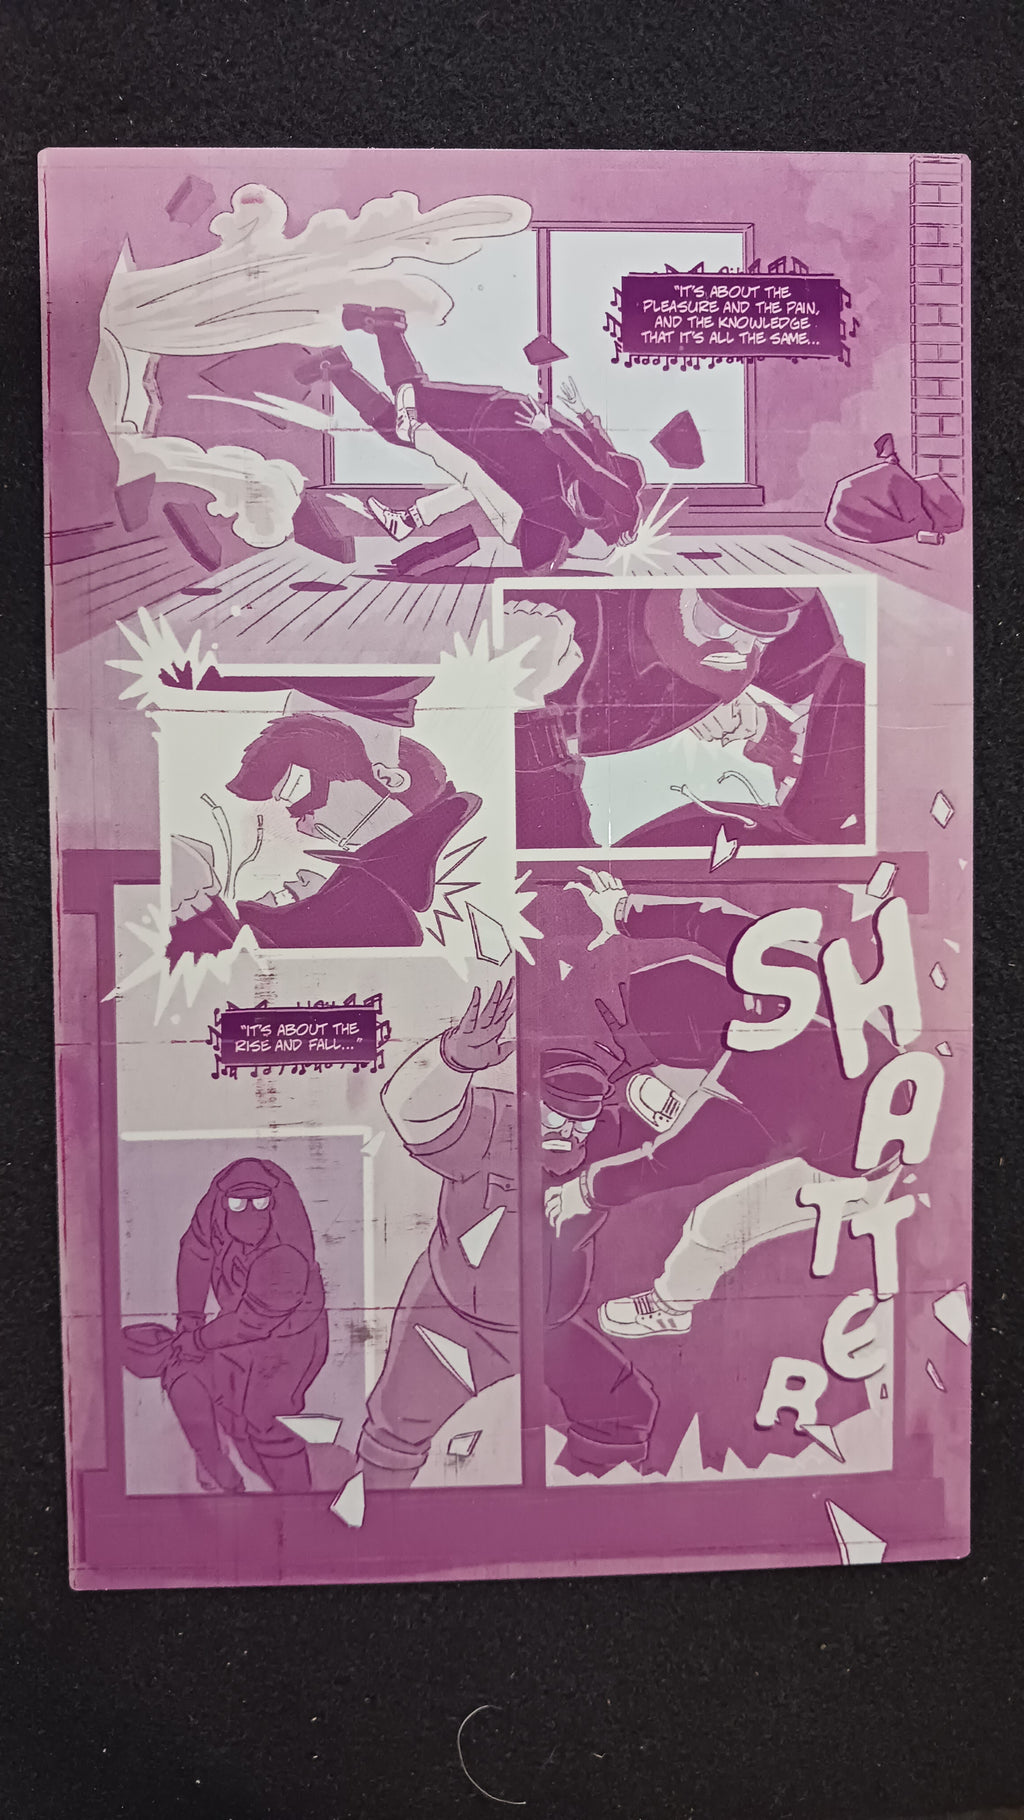 Death Drop Drag Assassin #1 - Page 10 - PRESSWORKS - Comic Art - Printer Plate - Magenta